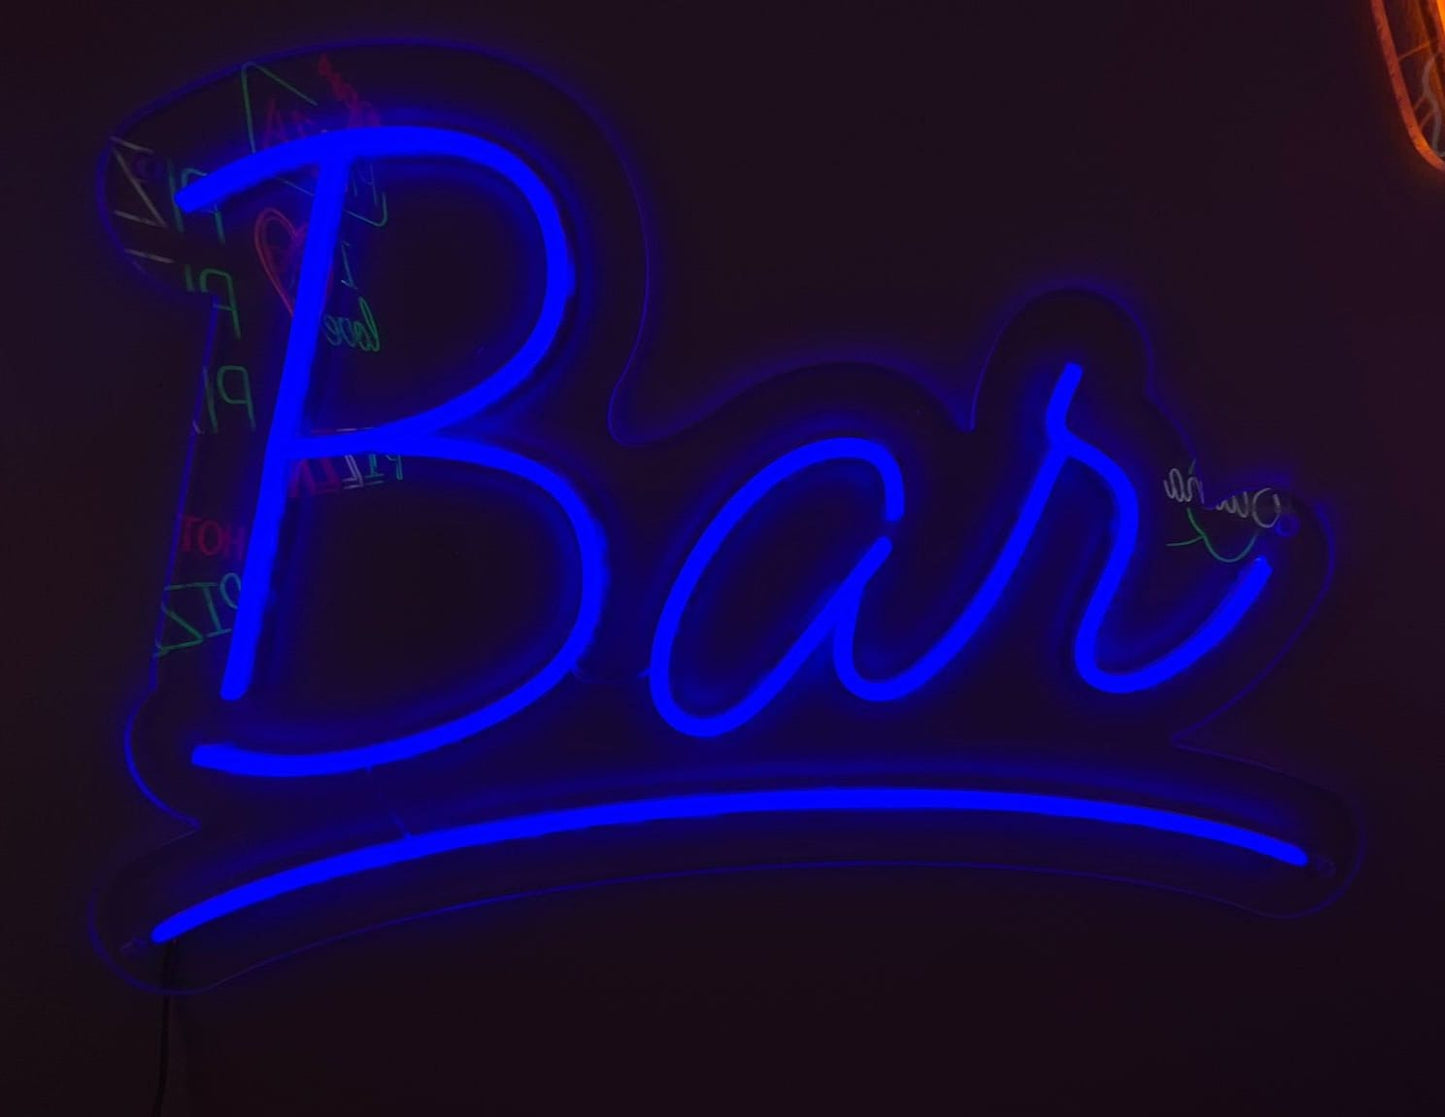 Bar neonreclame